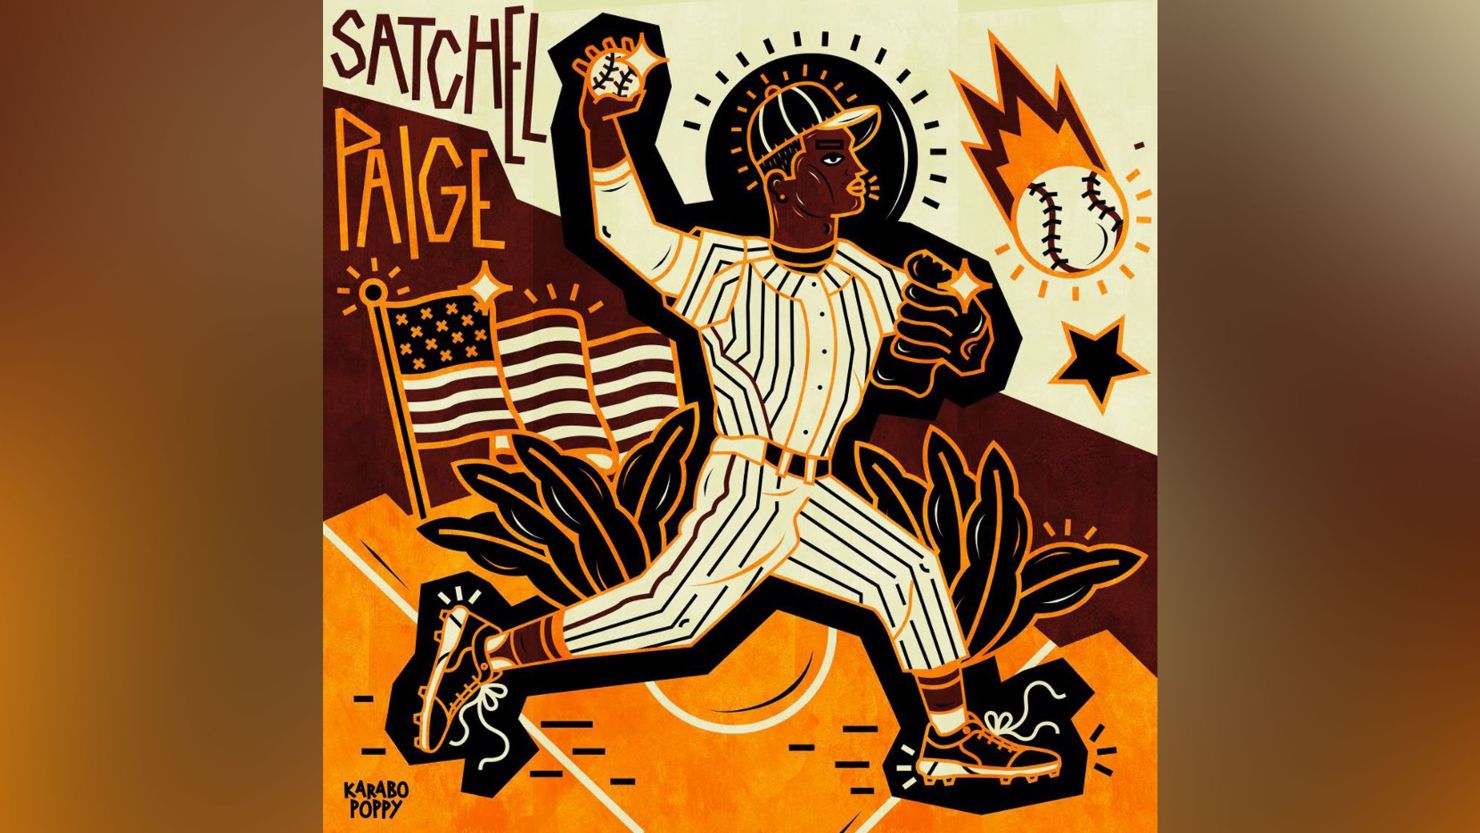 Karabo Poppy Moletsane worked on this portrait of Satchel Paige for MLB's Black History Month art series.